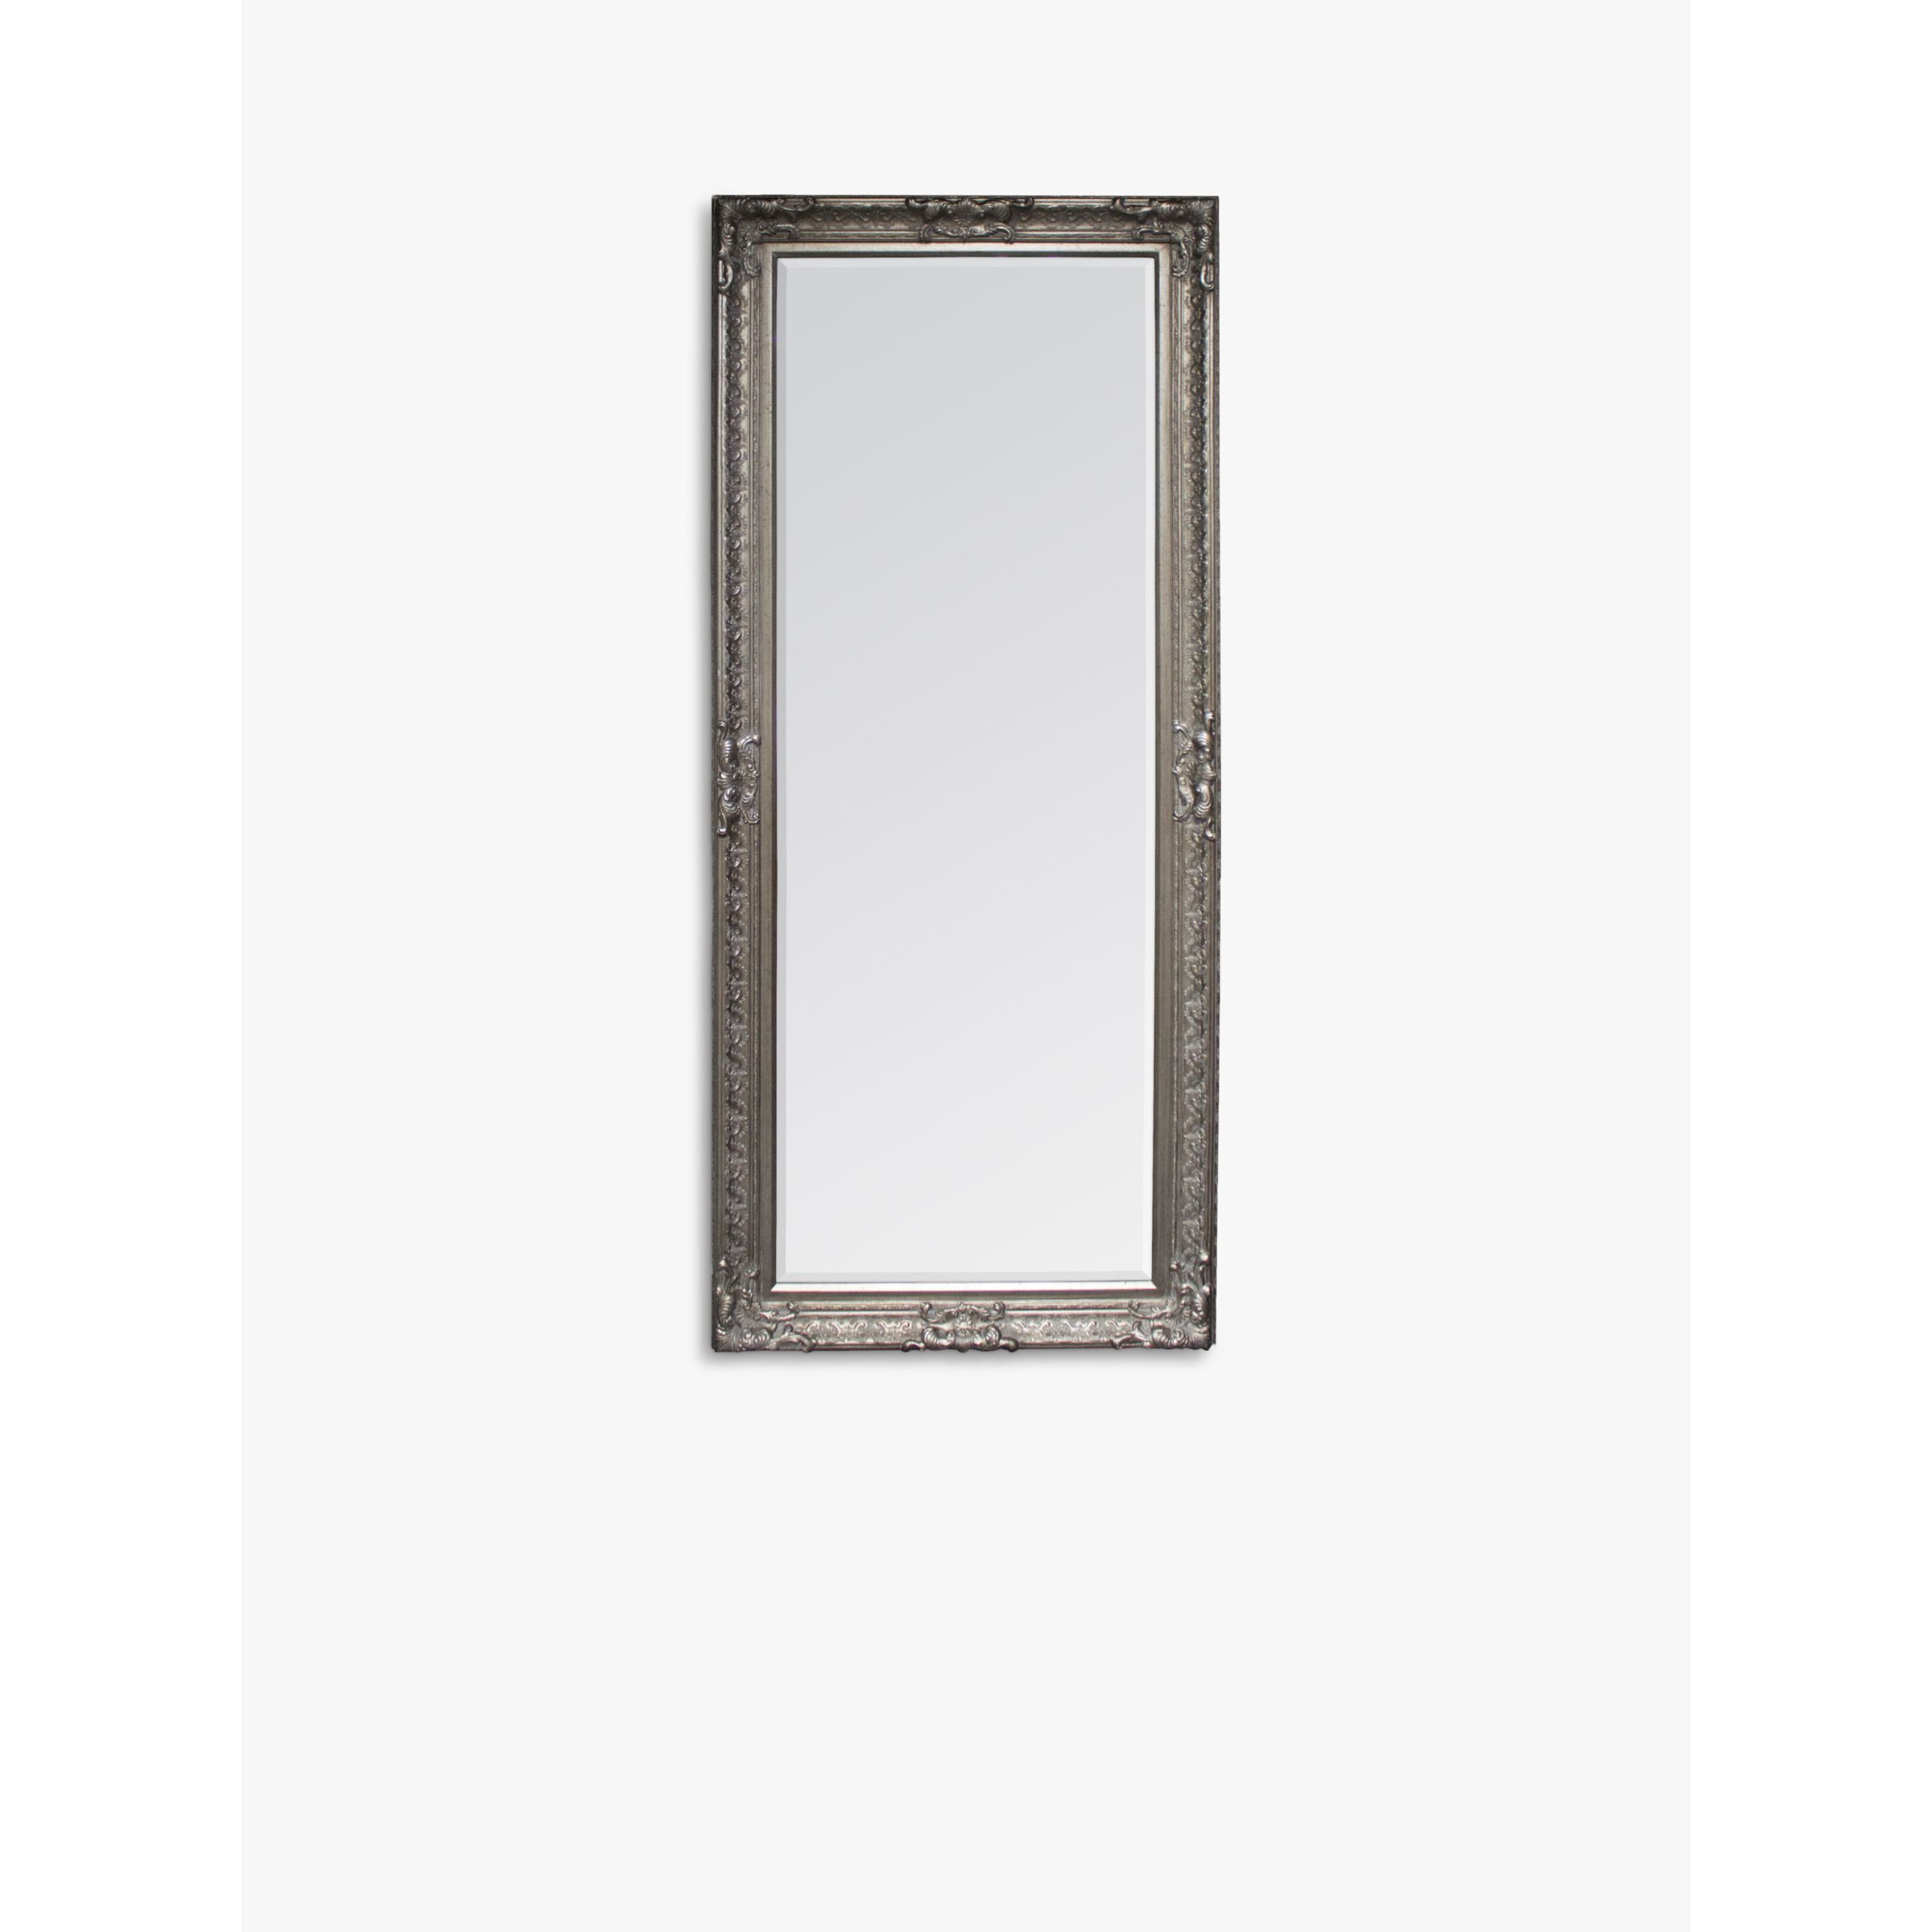 Gallery Direct Pembridge Rectangular Decorative Frame Wall/Leaner Mirror, 190 x 81.5cm - image 1